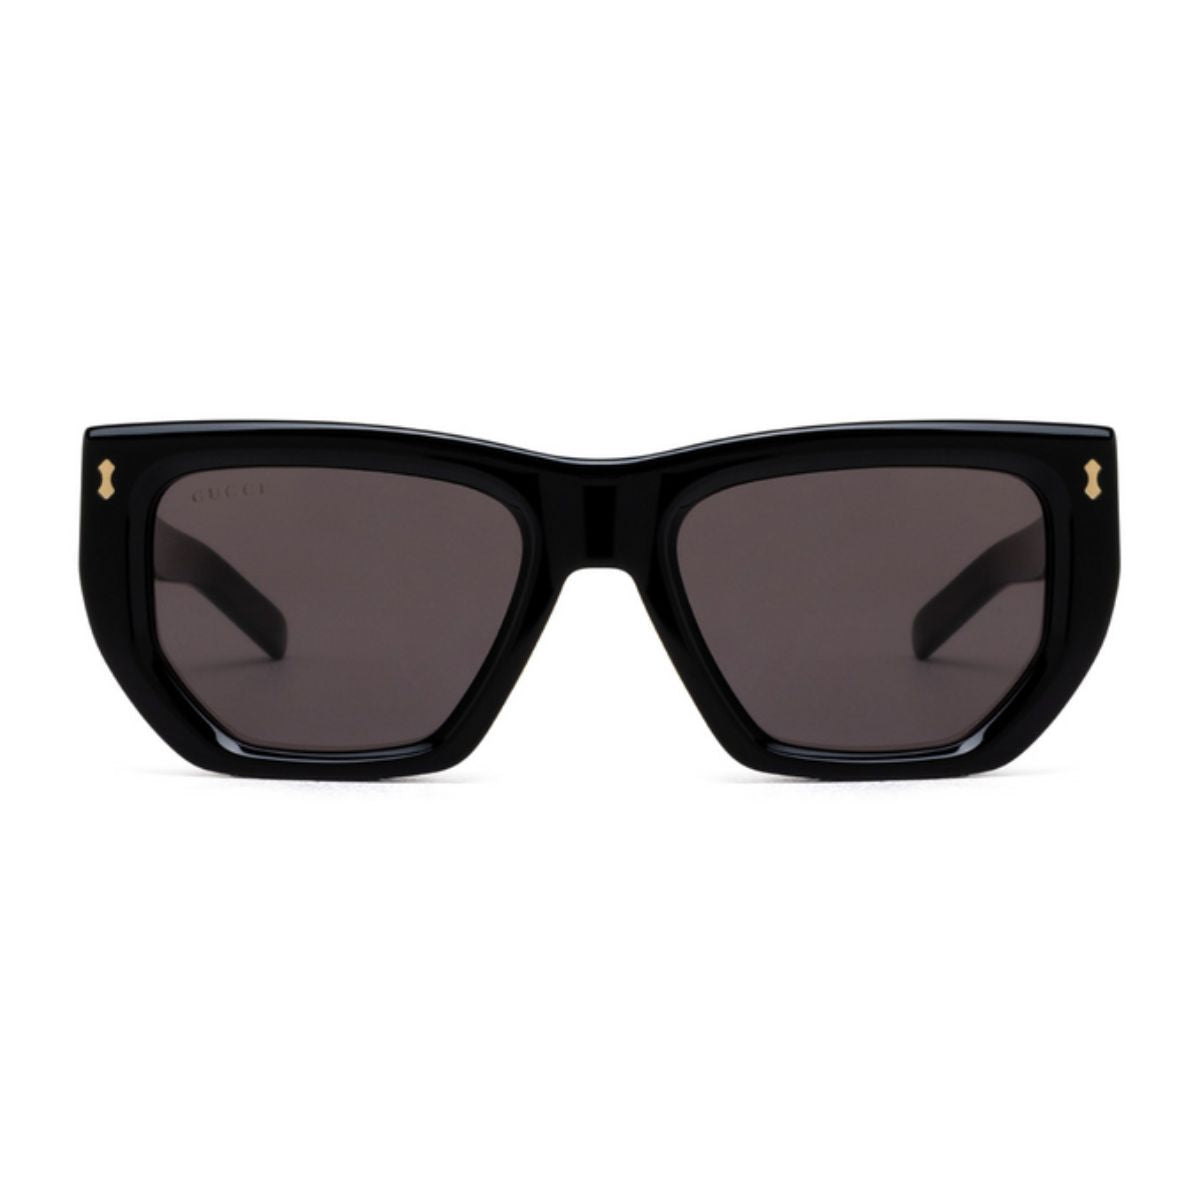 " Gucci Sunglasses for Women - Explore the 1520S 001 Collection"